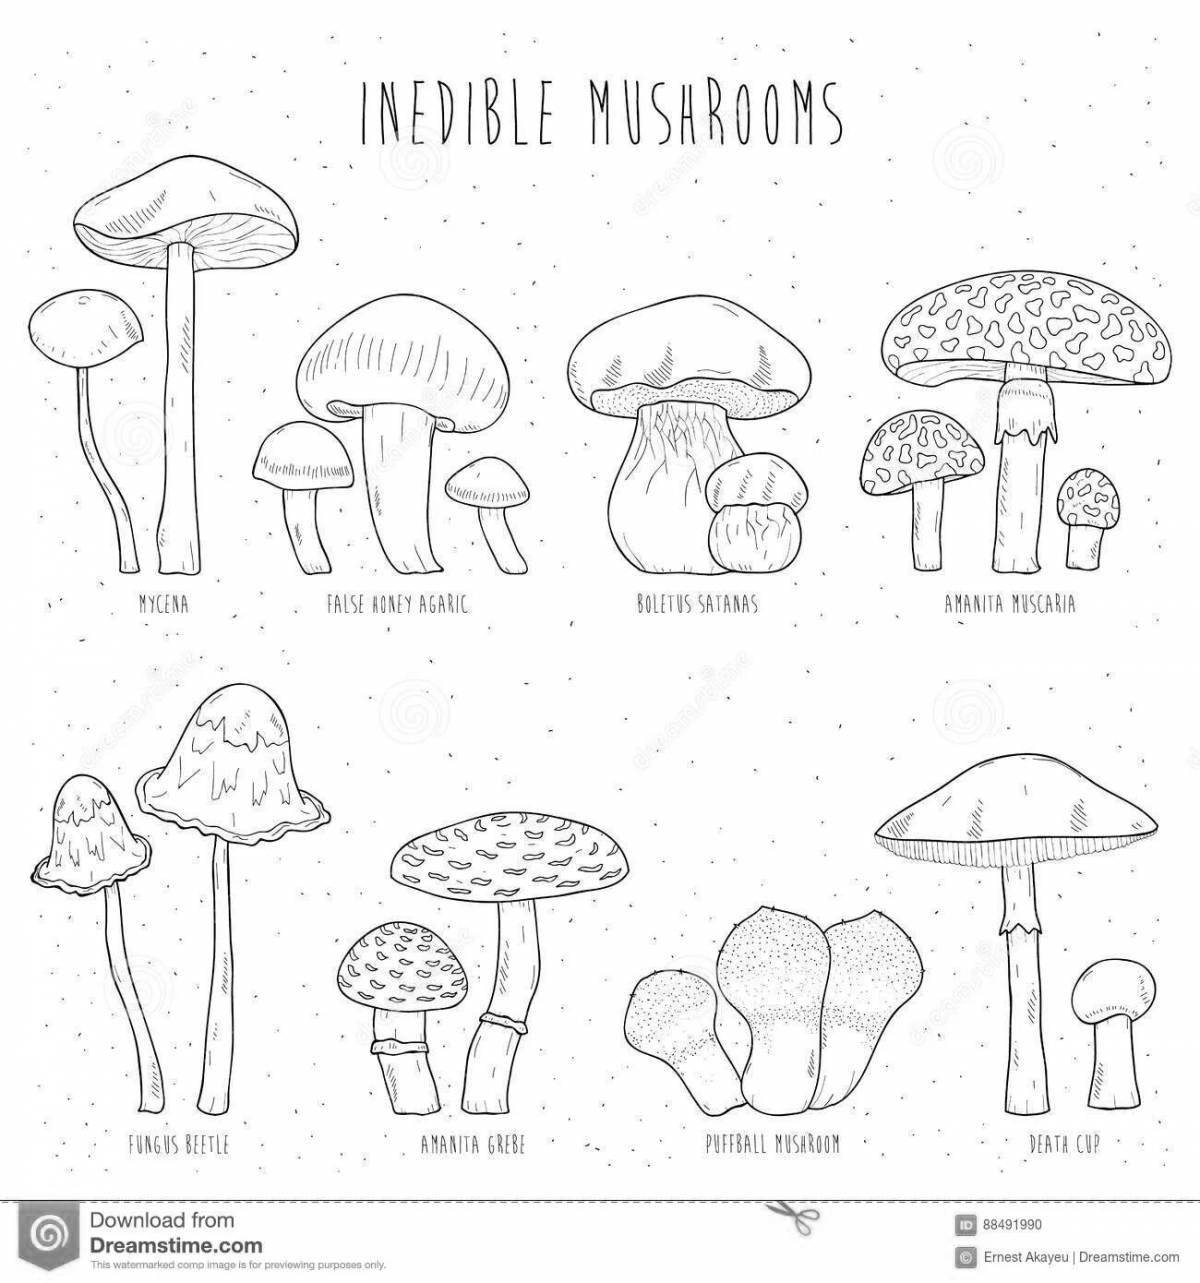 Charm of inedible mushrooms